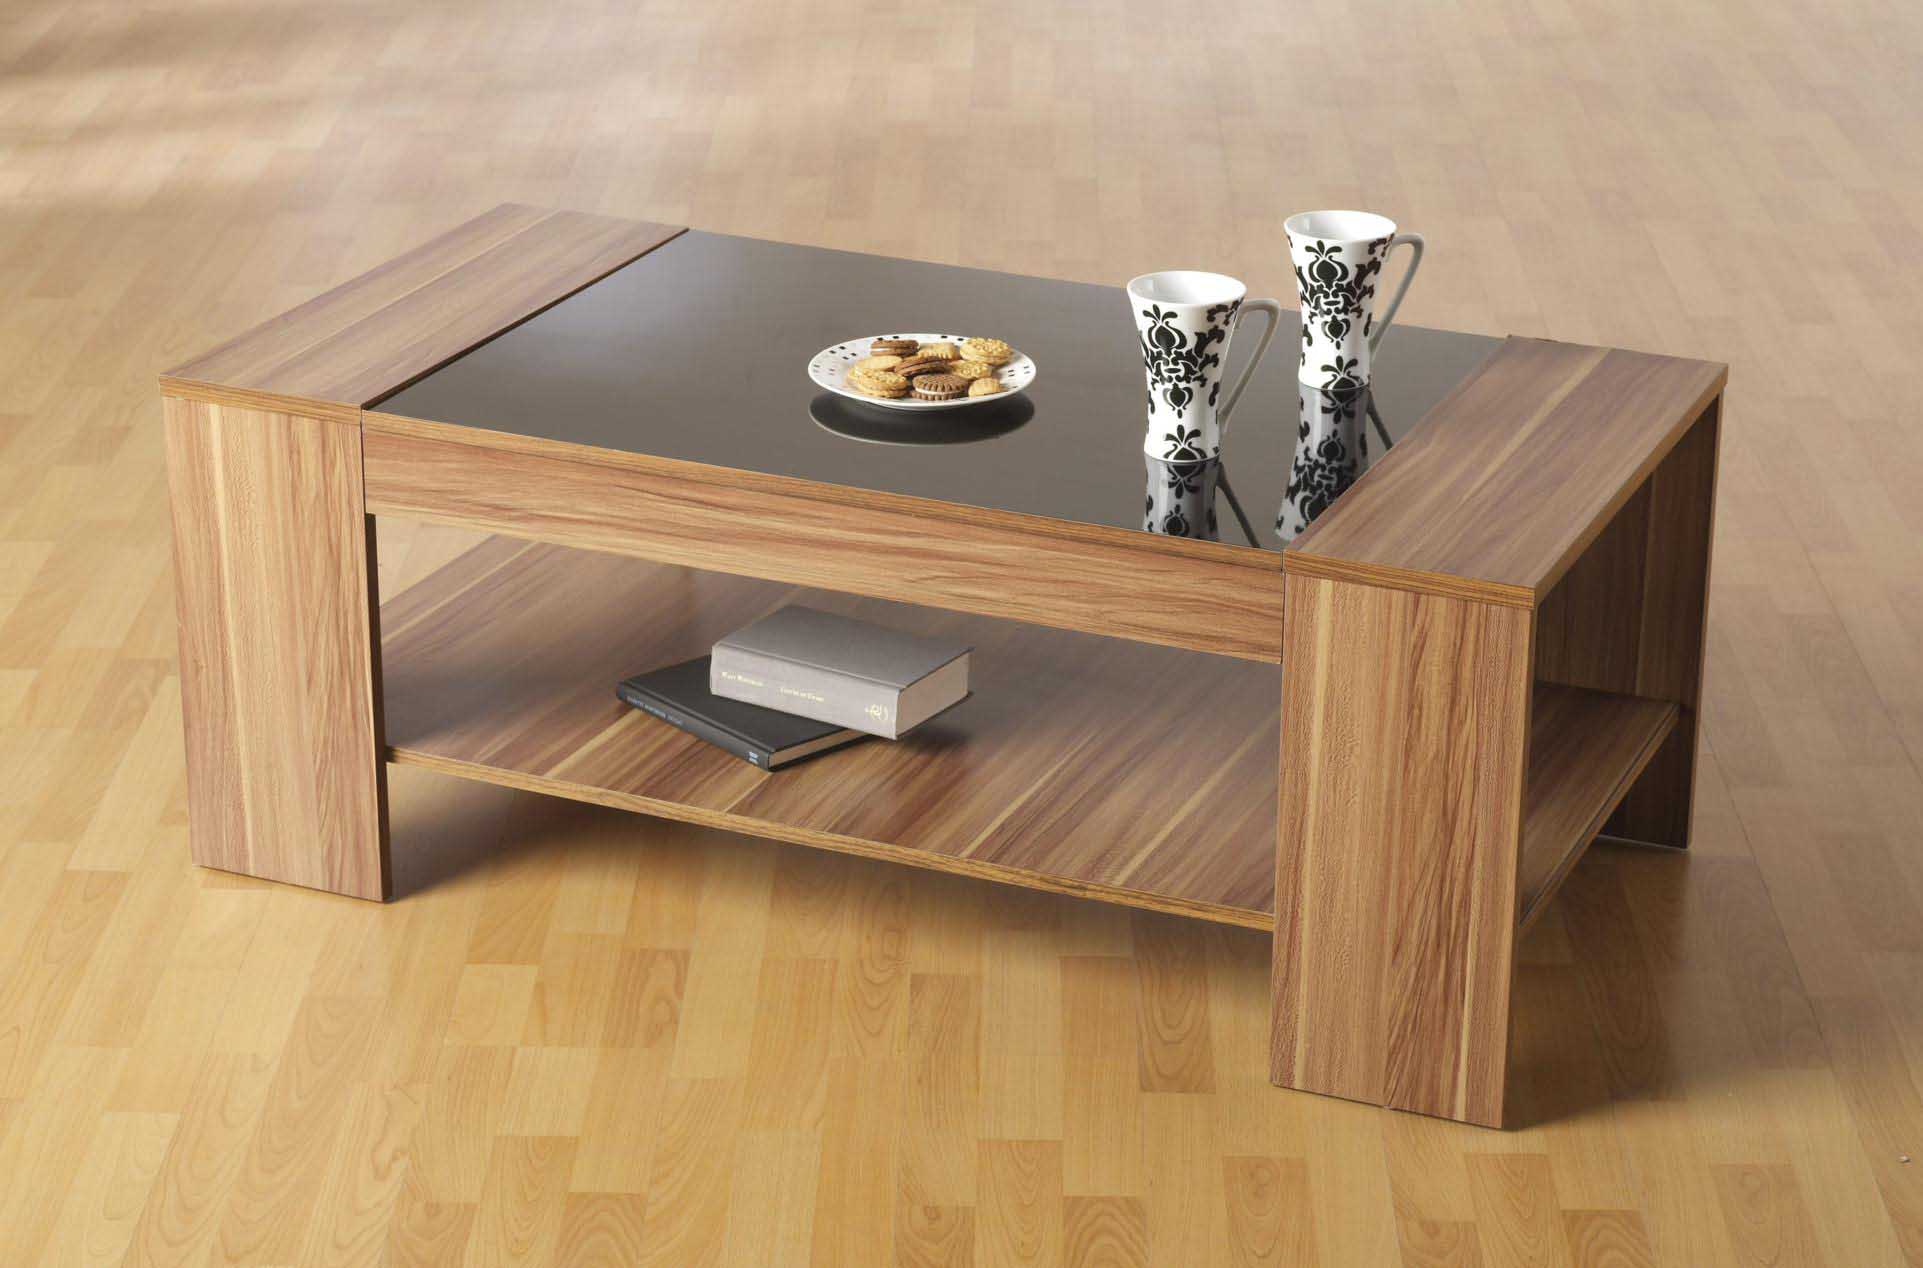 wooden tea table designs photo - 6